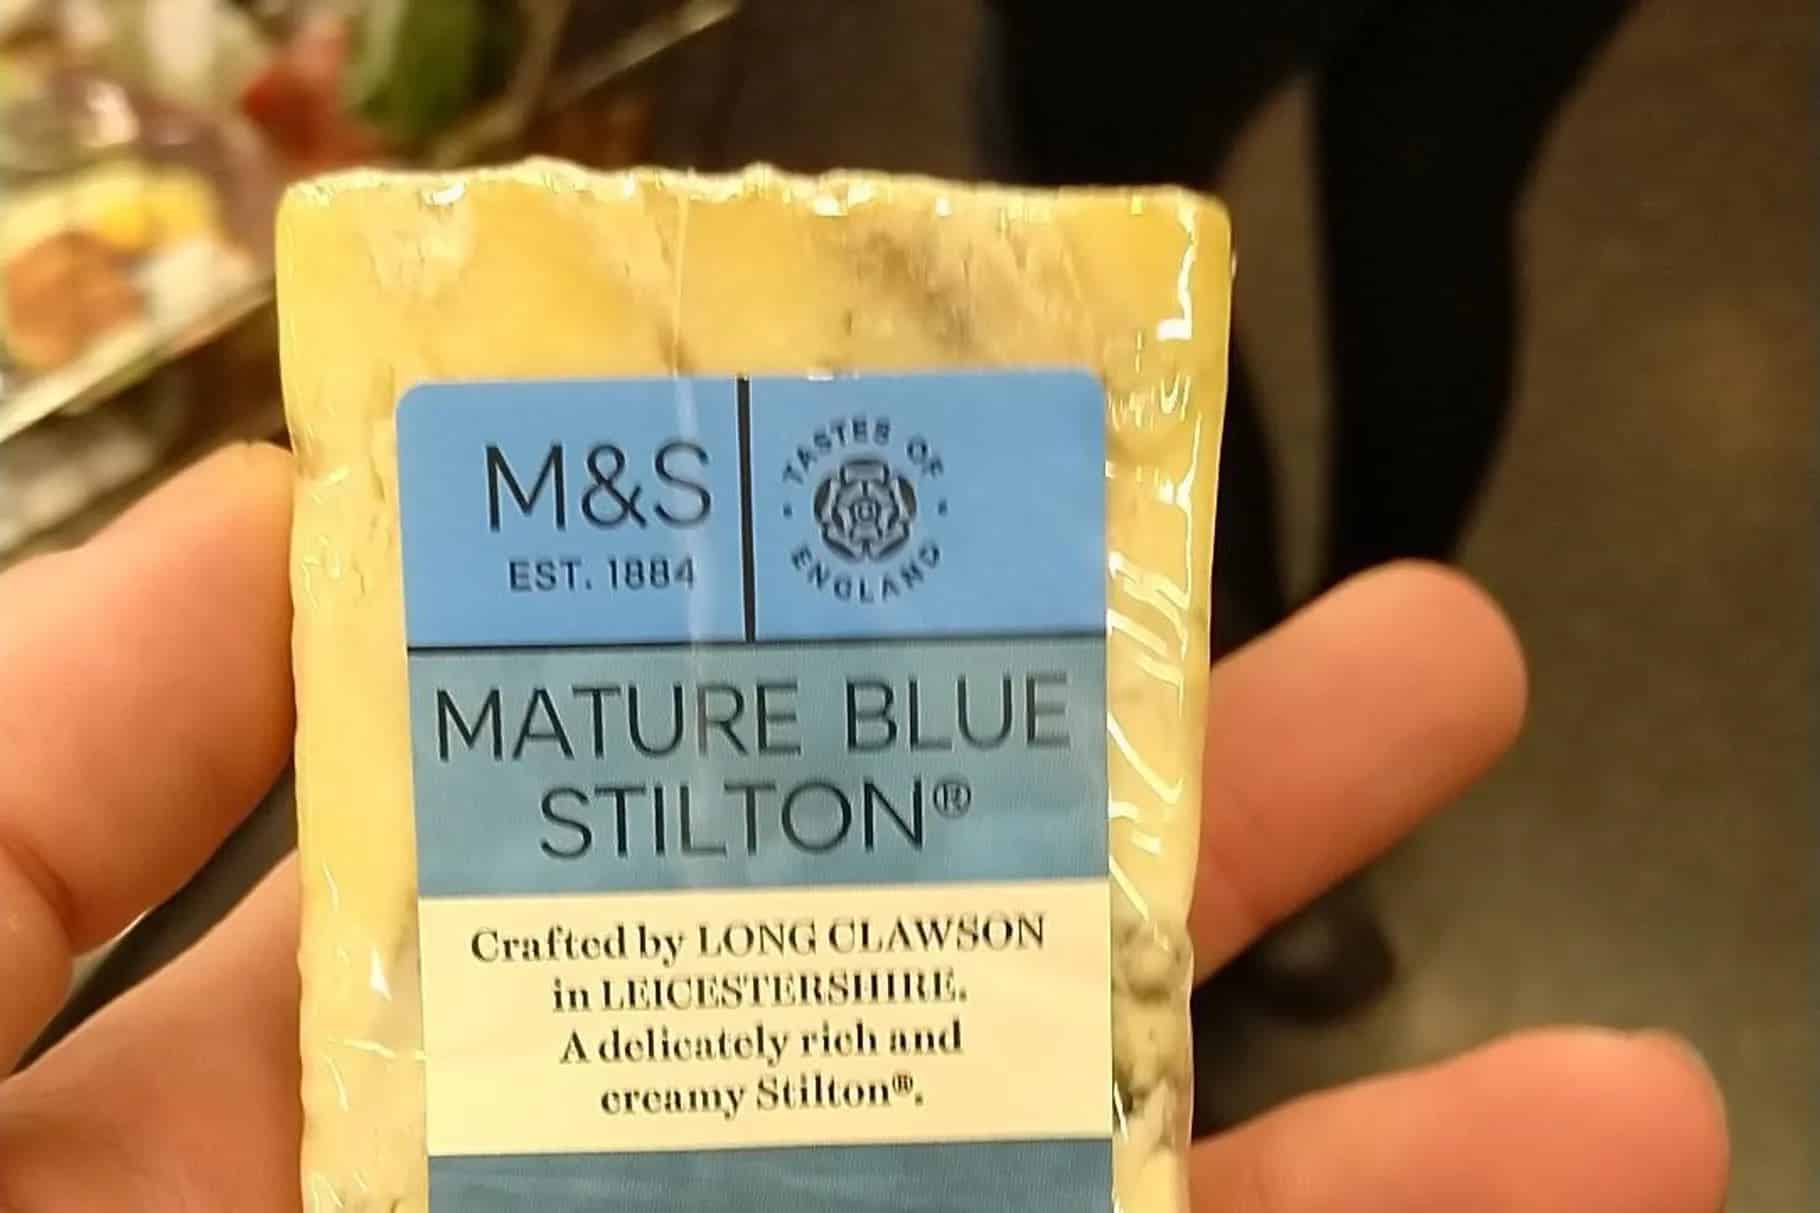 Aperçu de la photo du fromage.